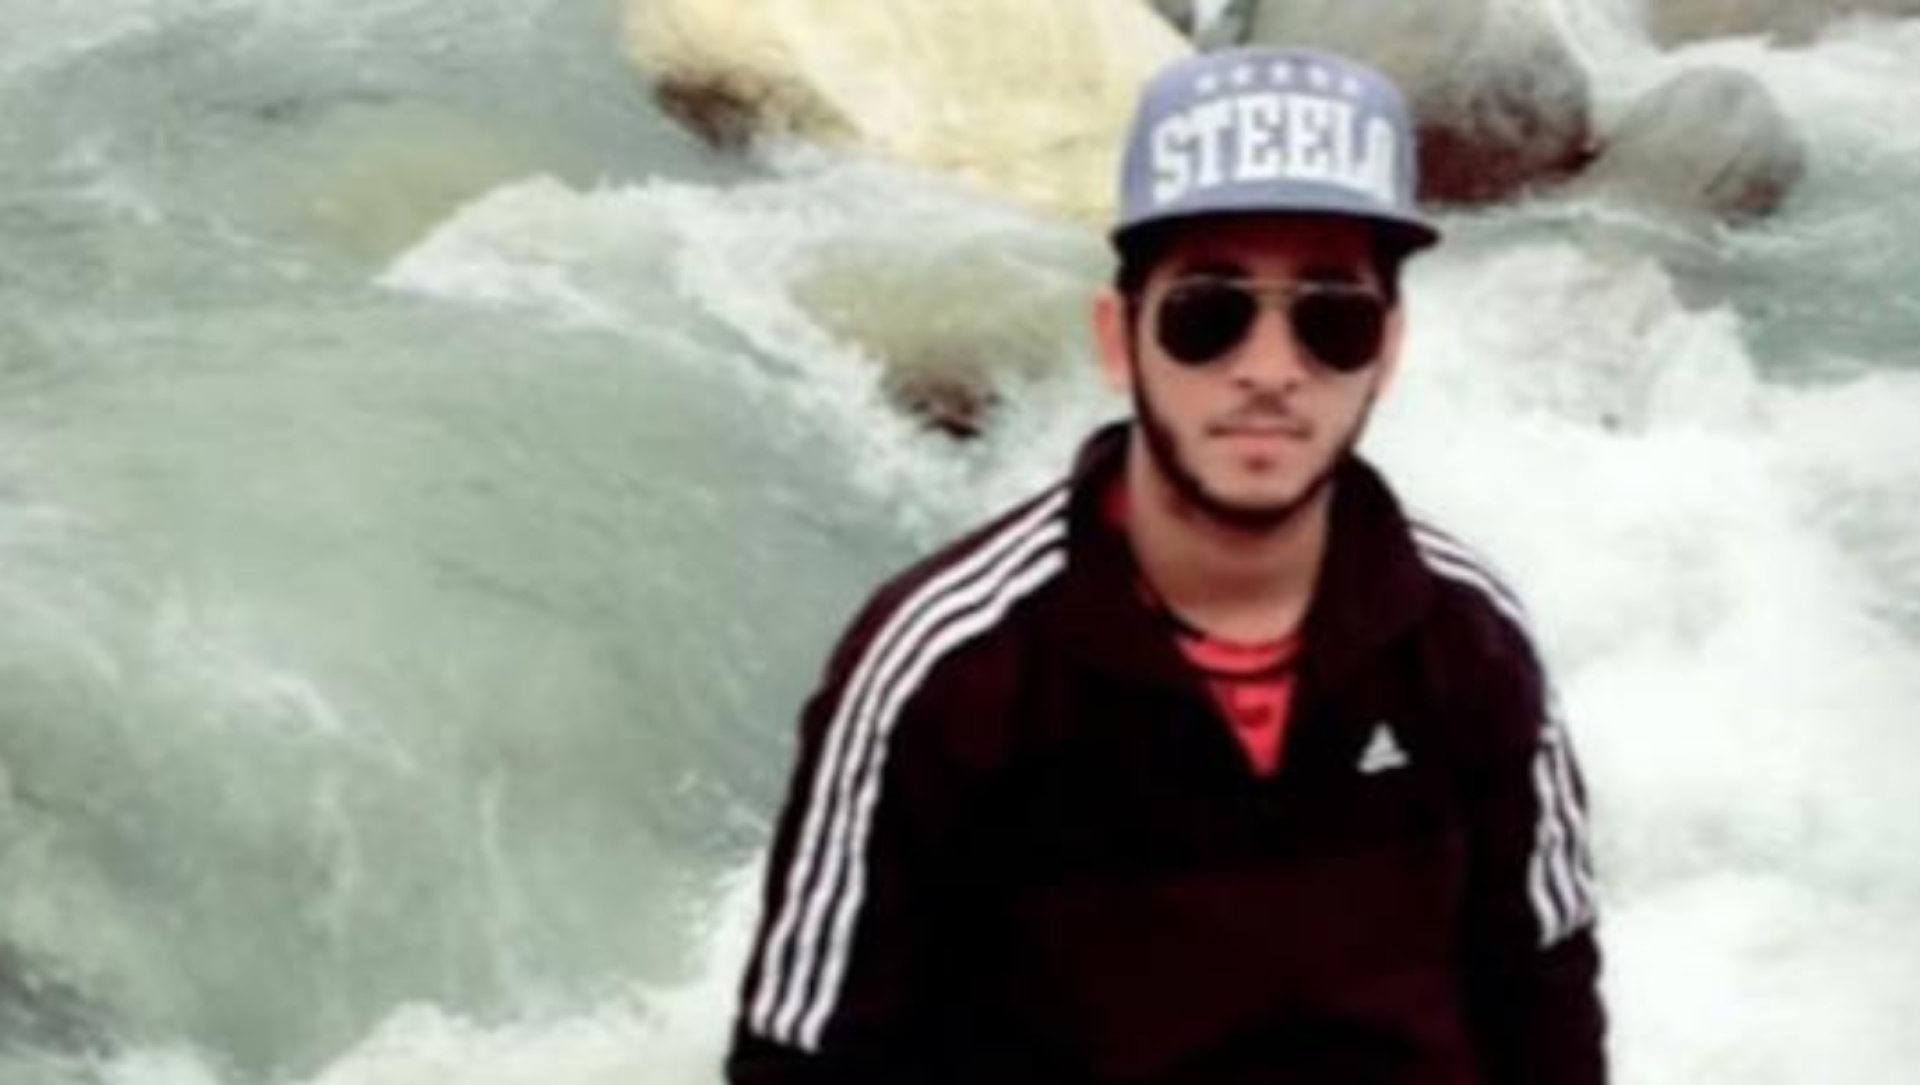 24 years old Chirag Antil from Sonepat, Haryana, Shot Dead in Canada